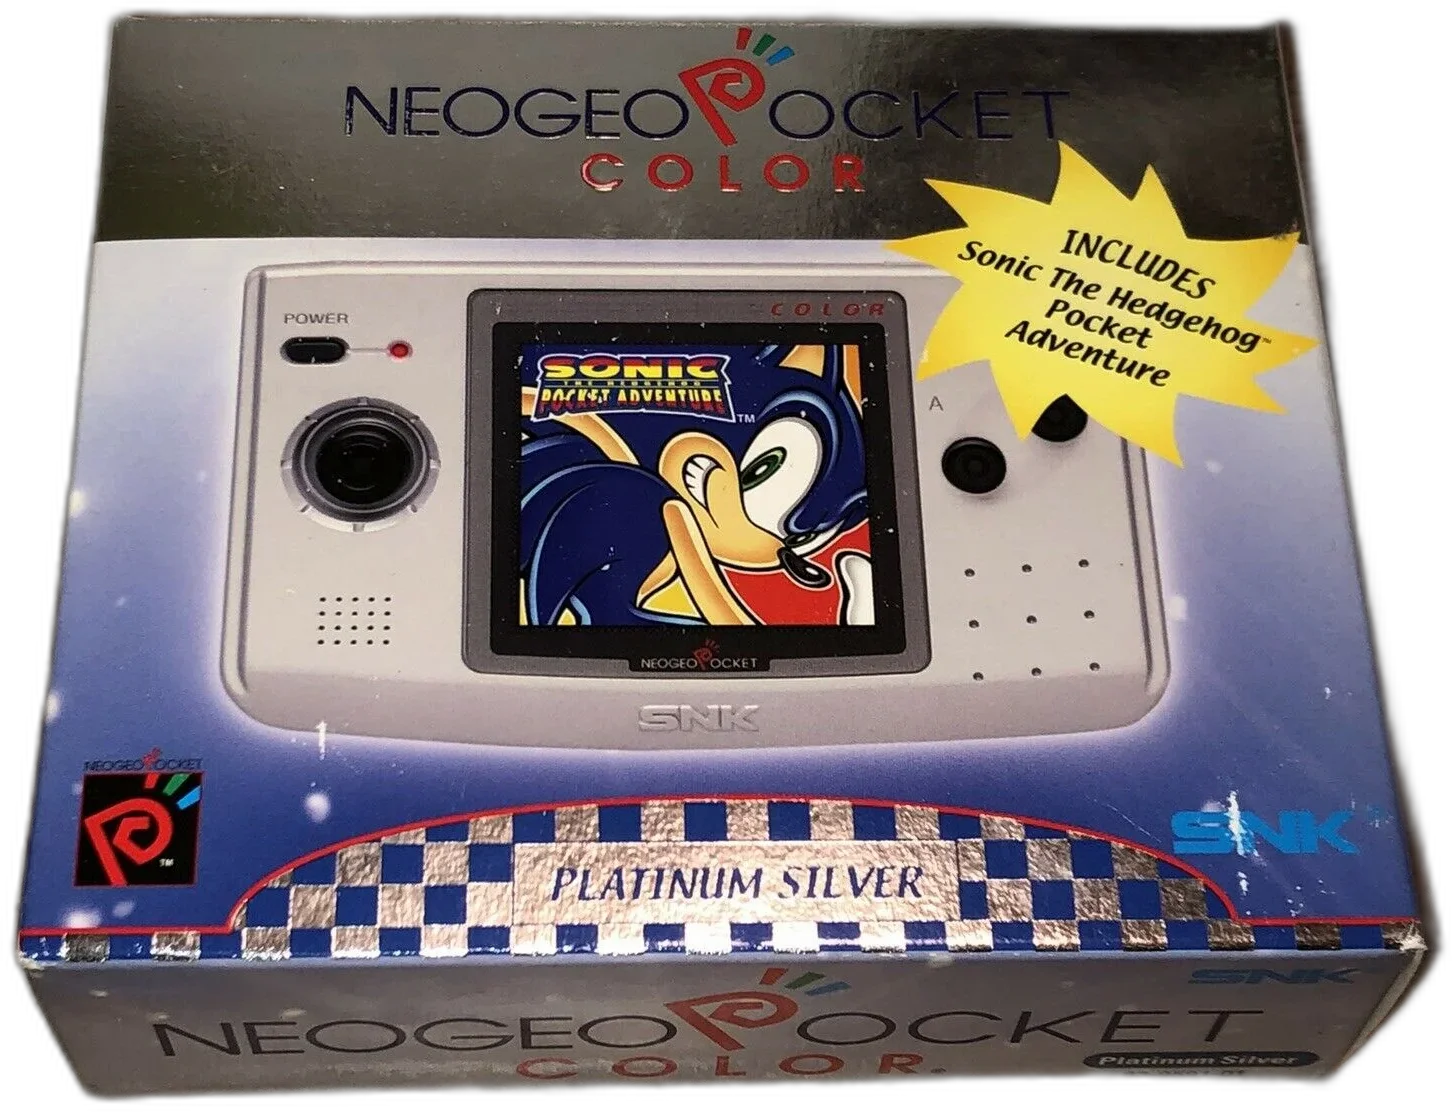  Neo Geo Pocket Color Platinum Silver Sonic The Hedgehog Pocket Adventure Bundle